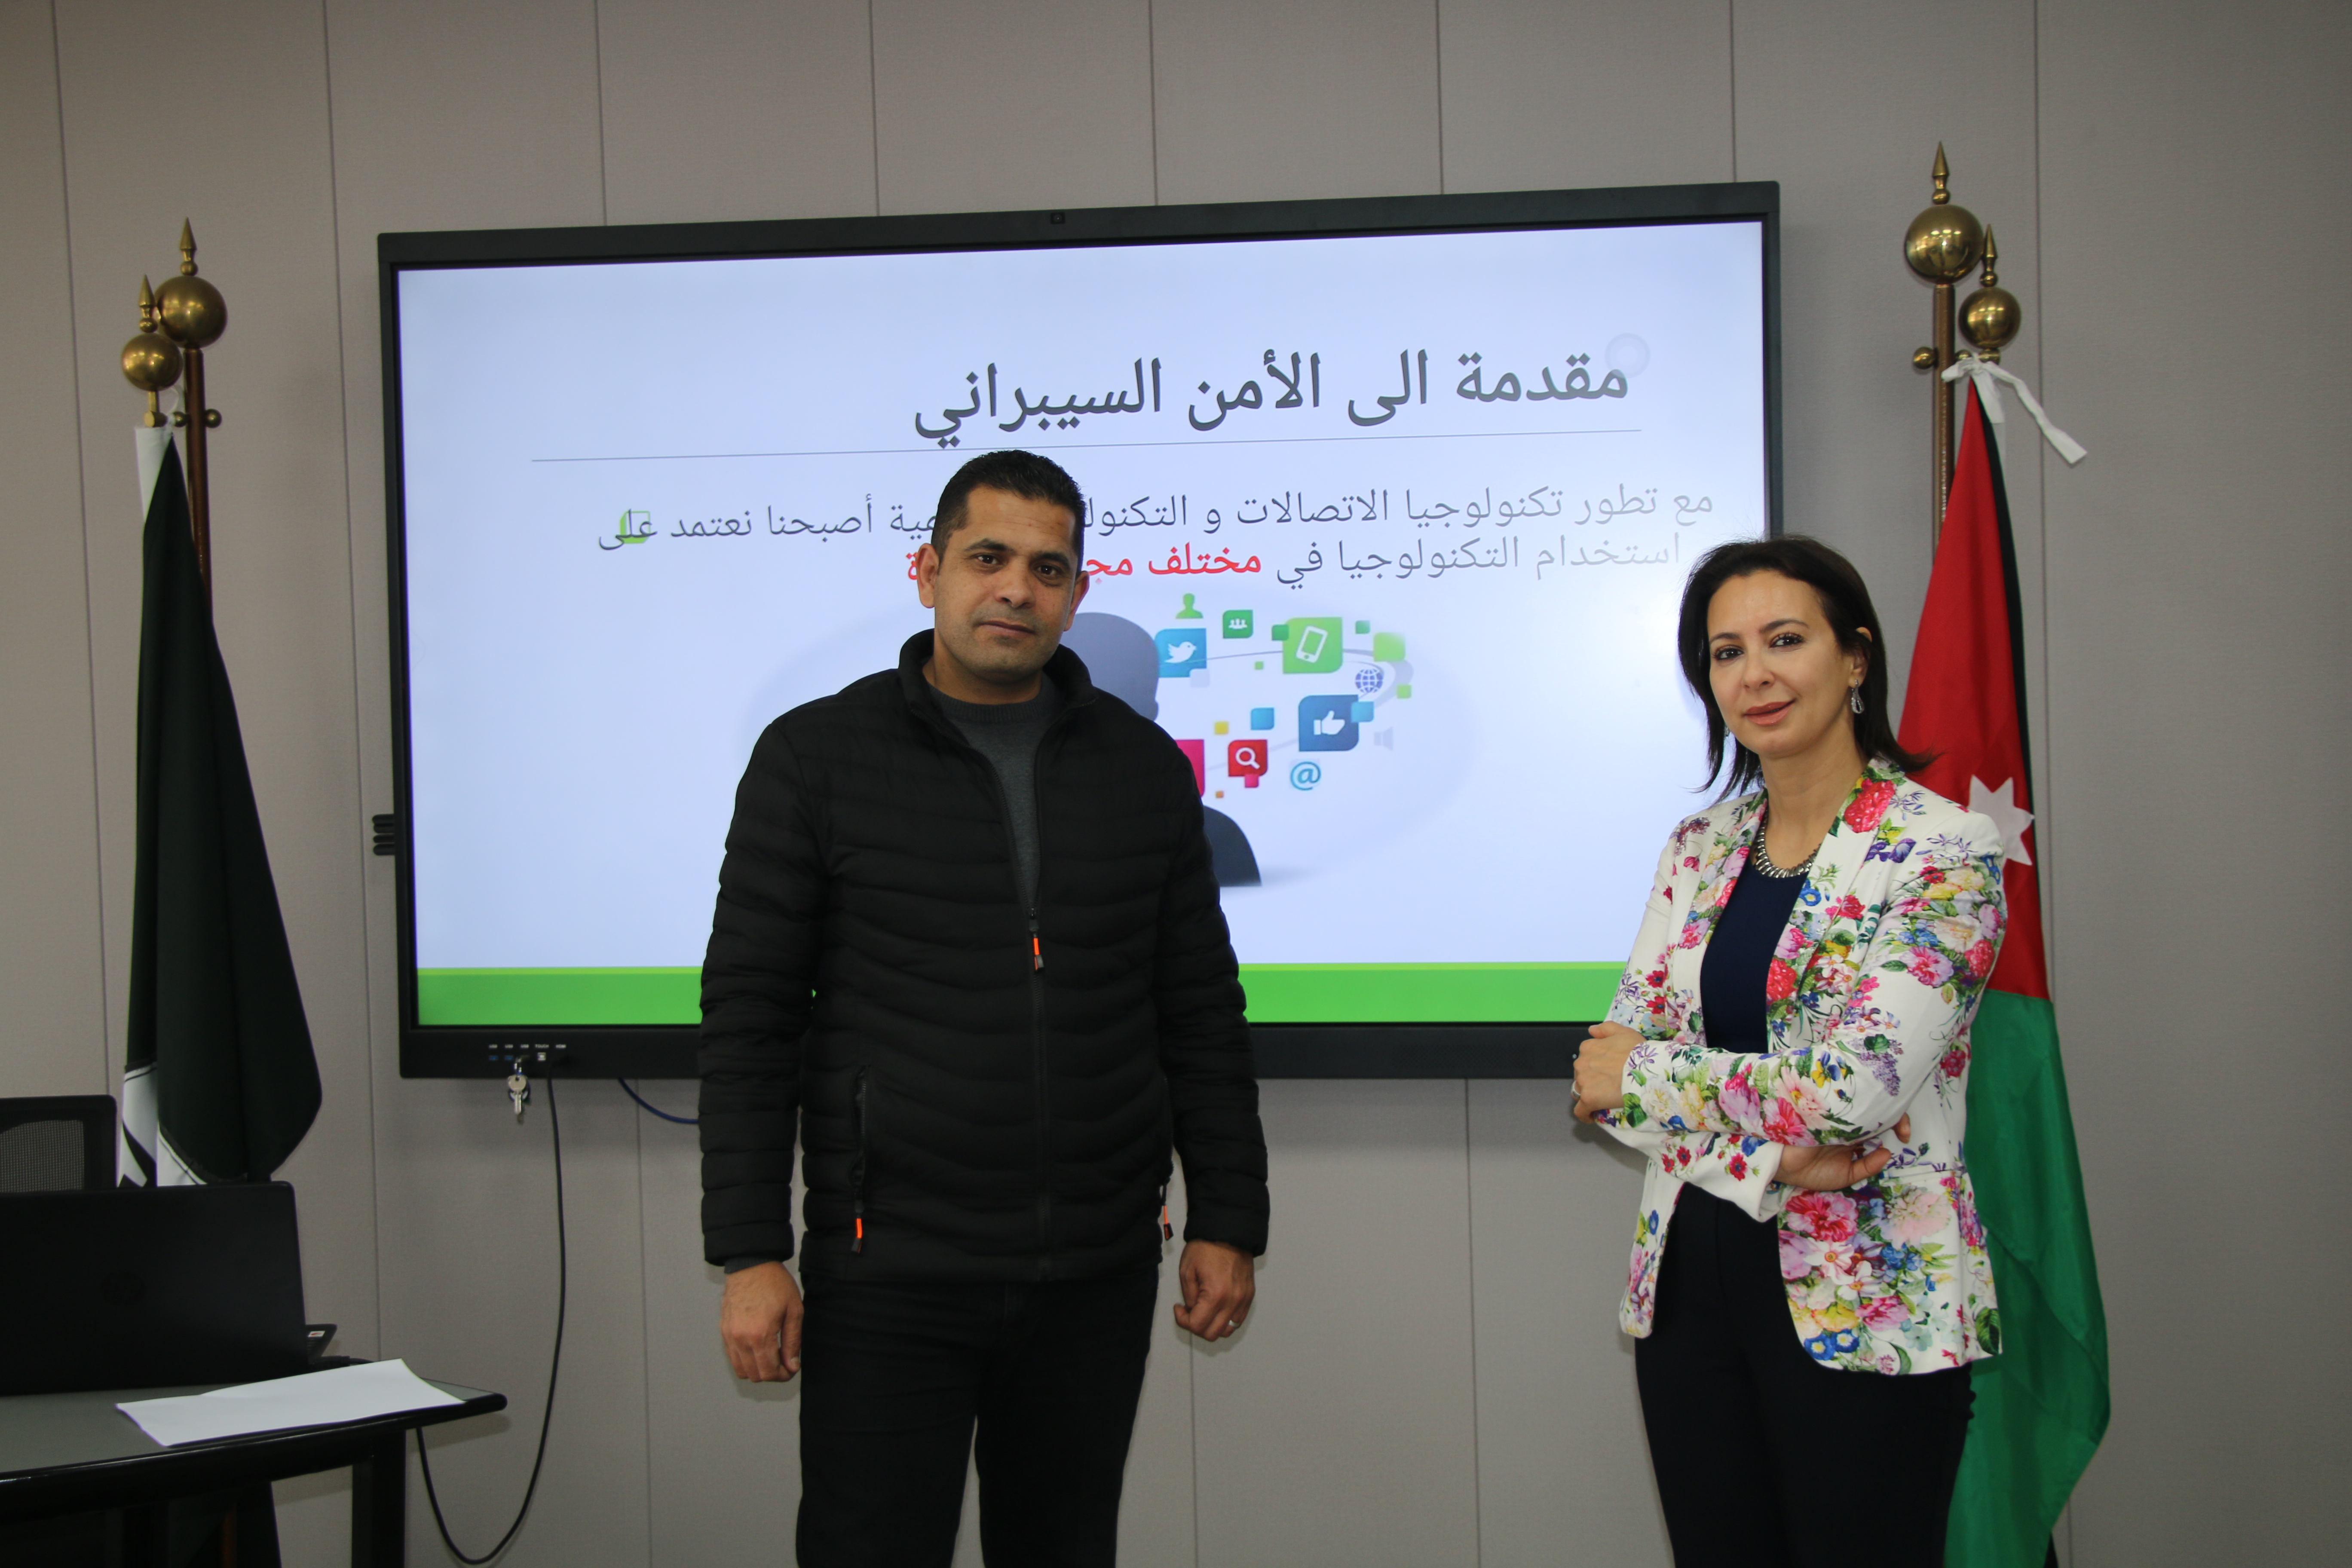 Launching the “Let’s Volunteer, Let’s Train” initiative at the Princess Basma Center for Jordanian Women’s Studies